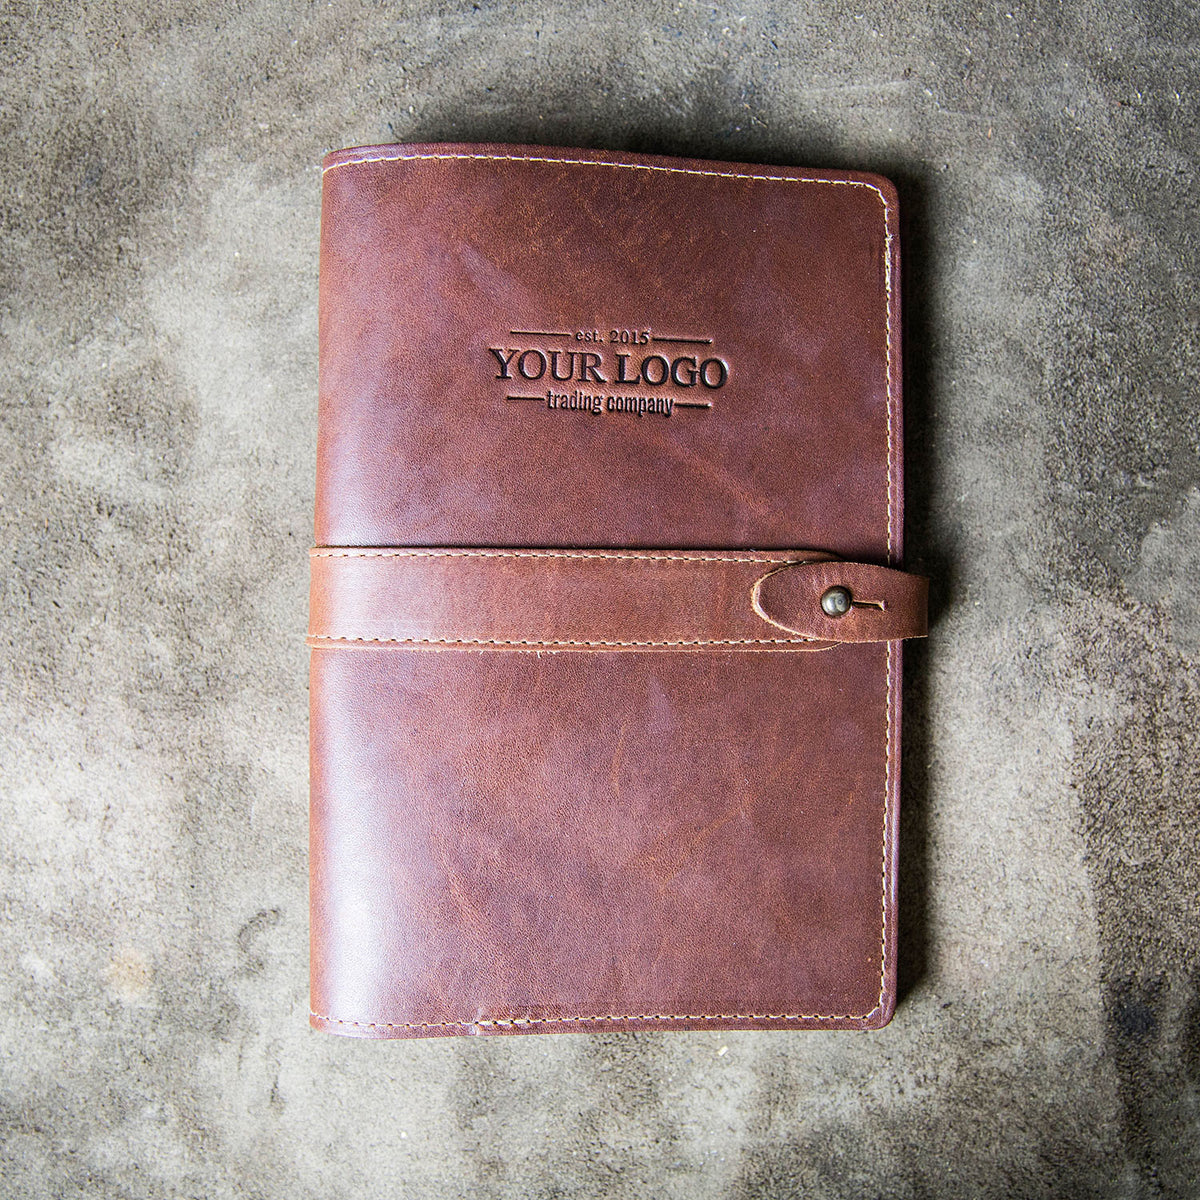 Wooden Notebooks | Personalized Wood Journals & Wooden Pens - woodgeekstore